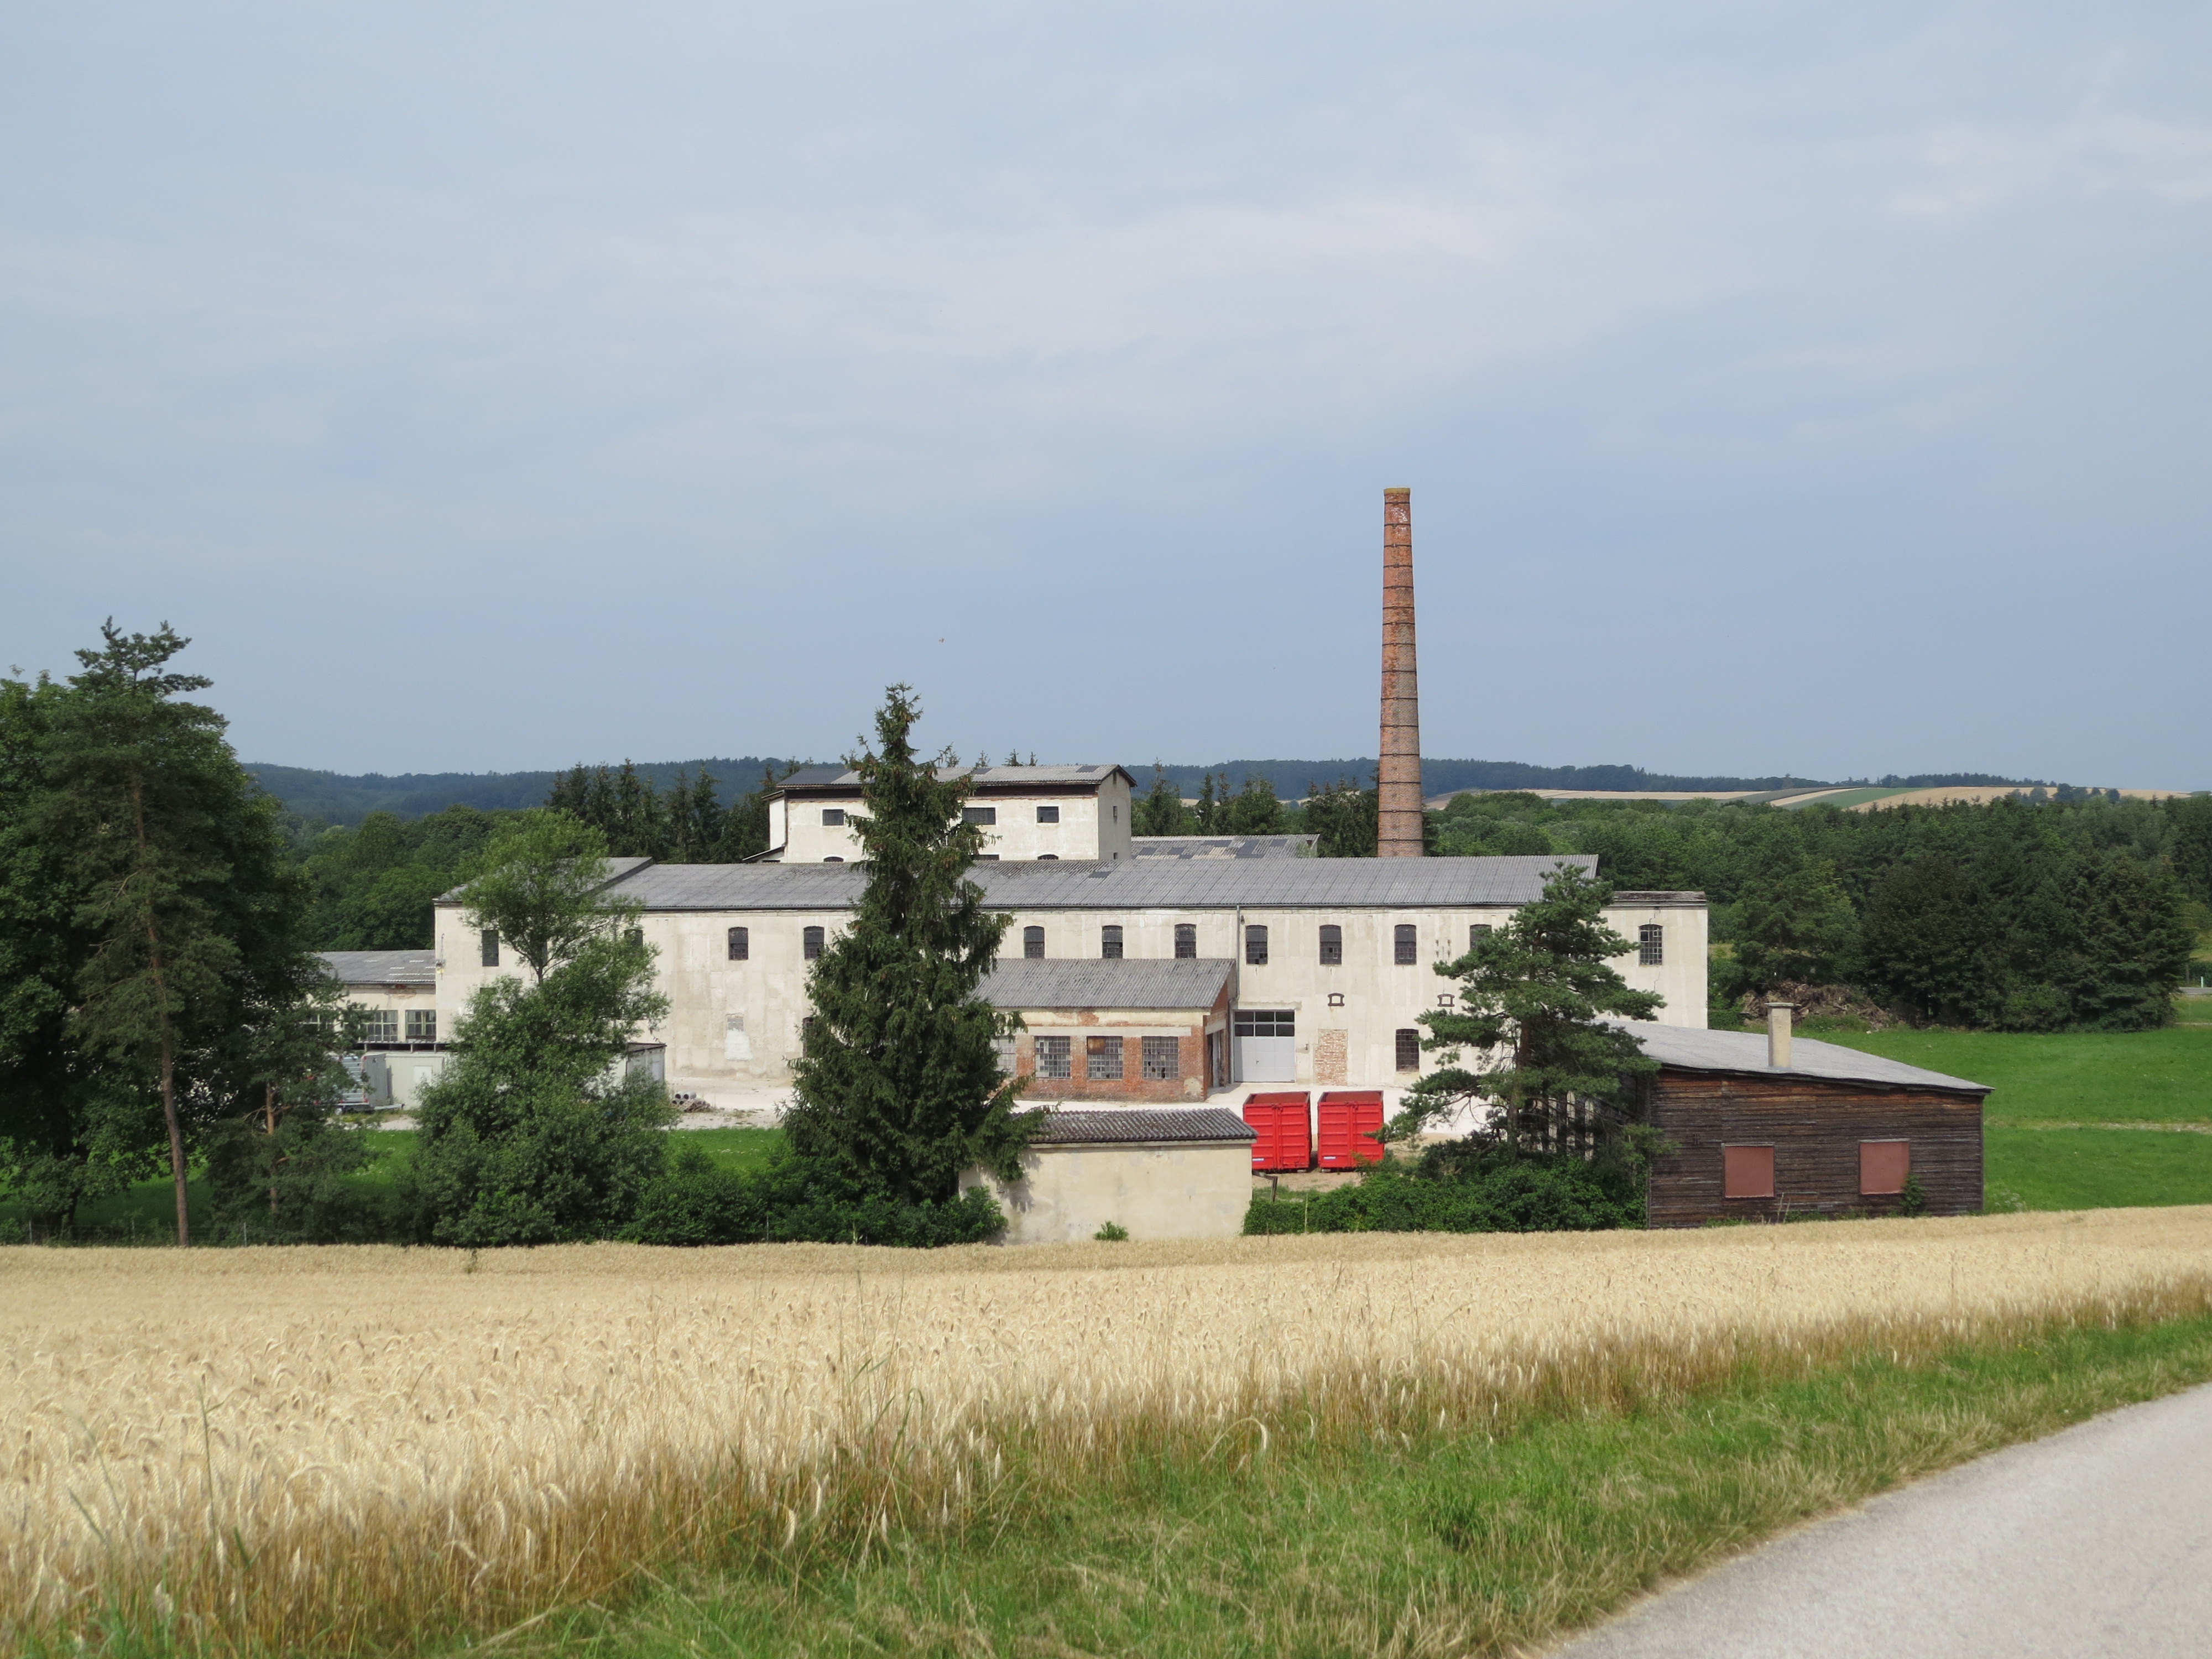 2018-07-10 (207) Former Papierfabrik Mahler OHG in Rennersdorf, Ober-Grafendorf, Austria